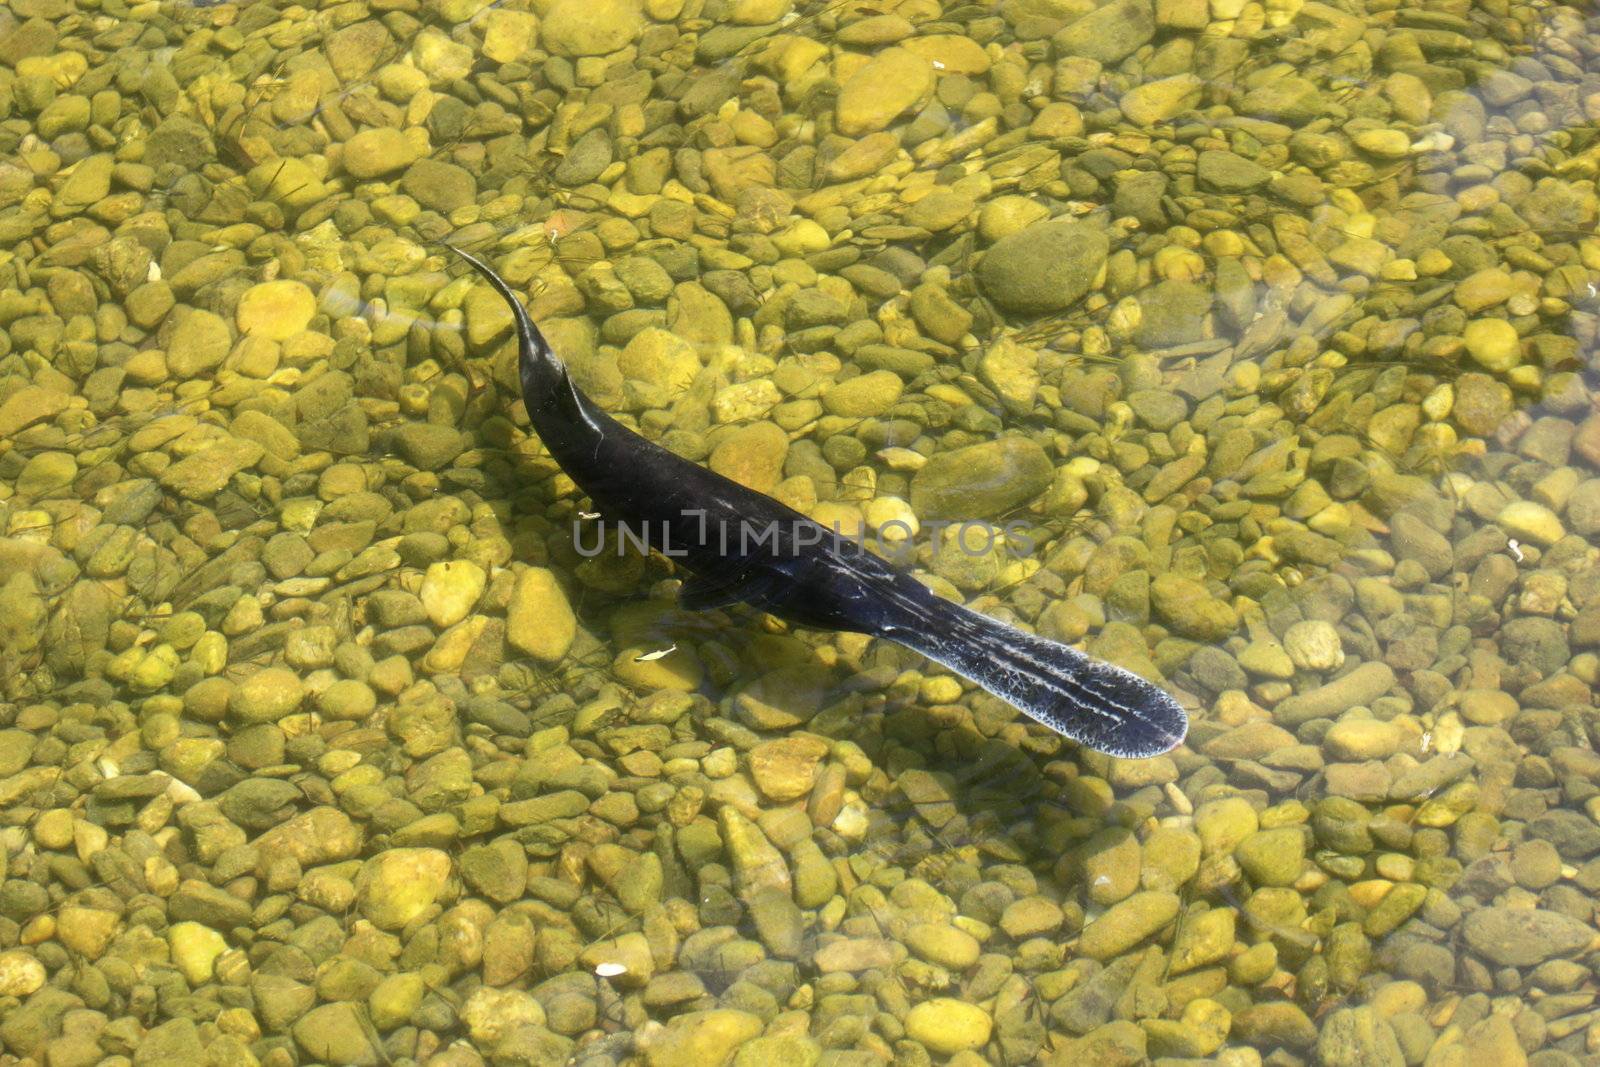 polyodon spathula, a bizarre fish in an artificial lake